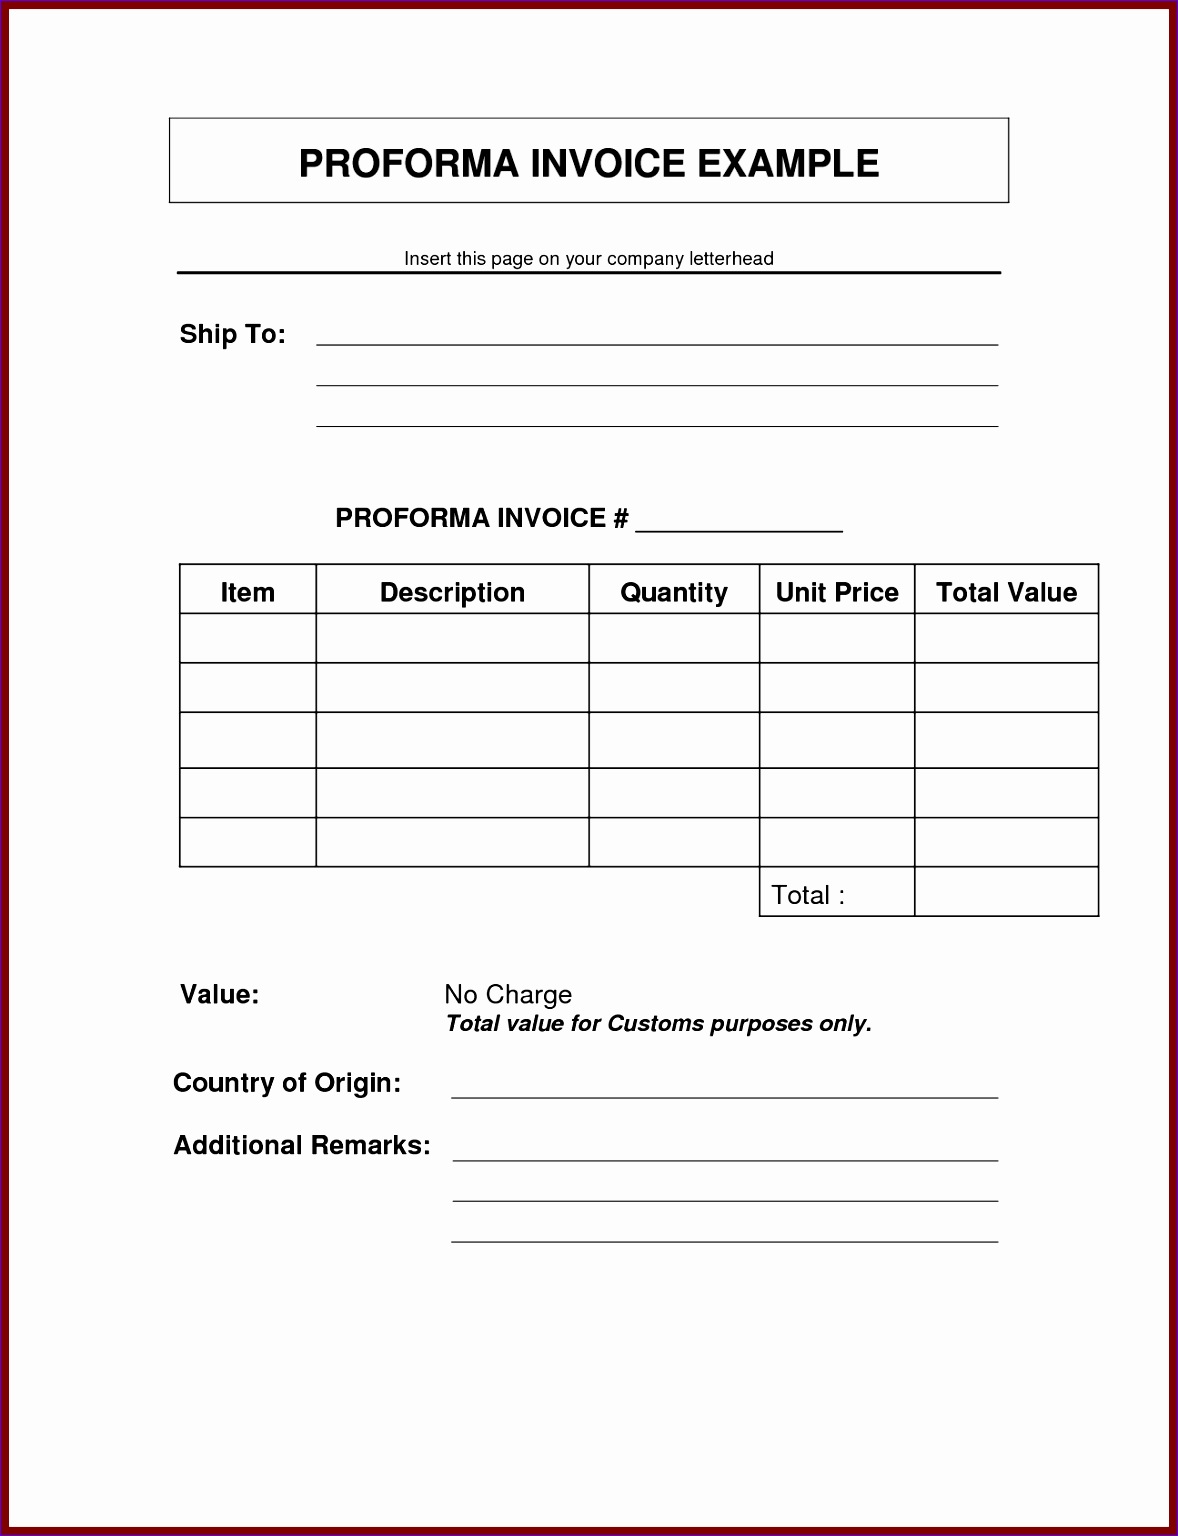 8 sample of proforma invoice template sendletters Sample A Proforma Invoice